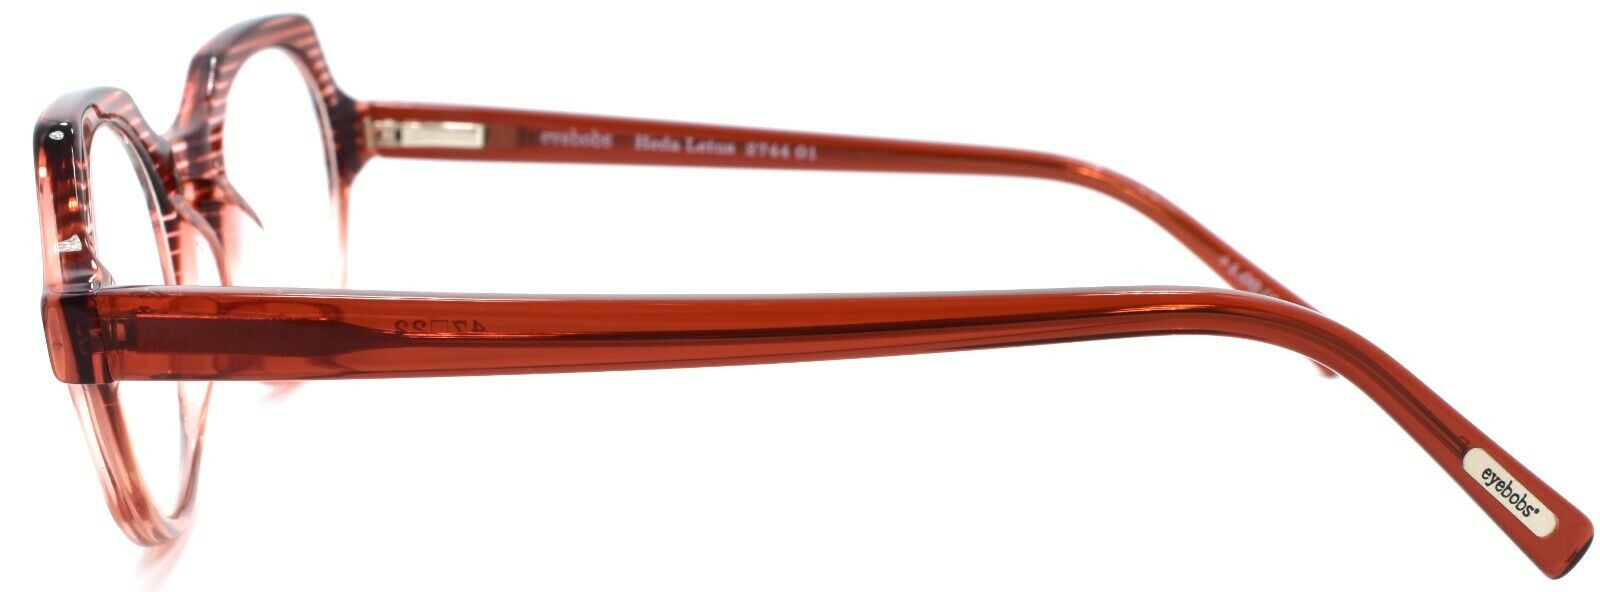 3-Eyebobs Heda Letus 2744 01 Women's Reading Glasses Red / Pink Stripes +1.25-842754159708-IKSpecs